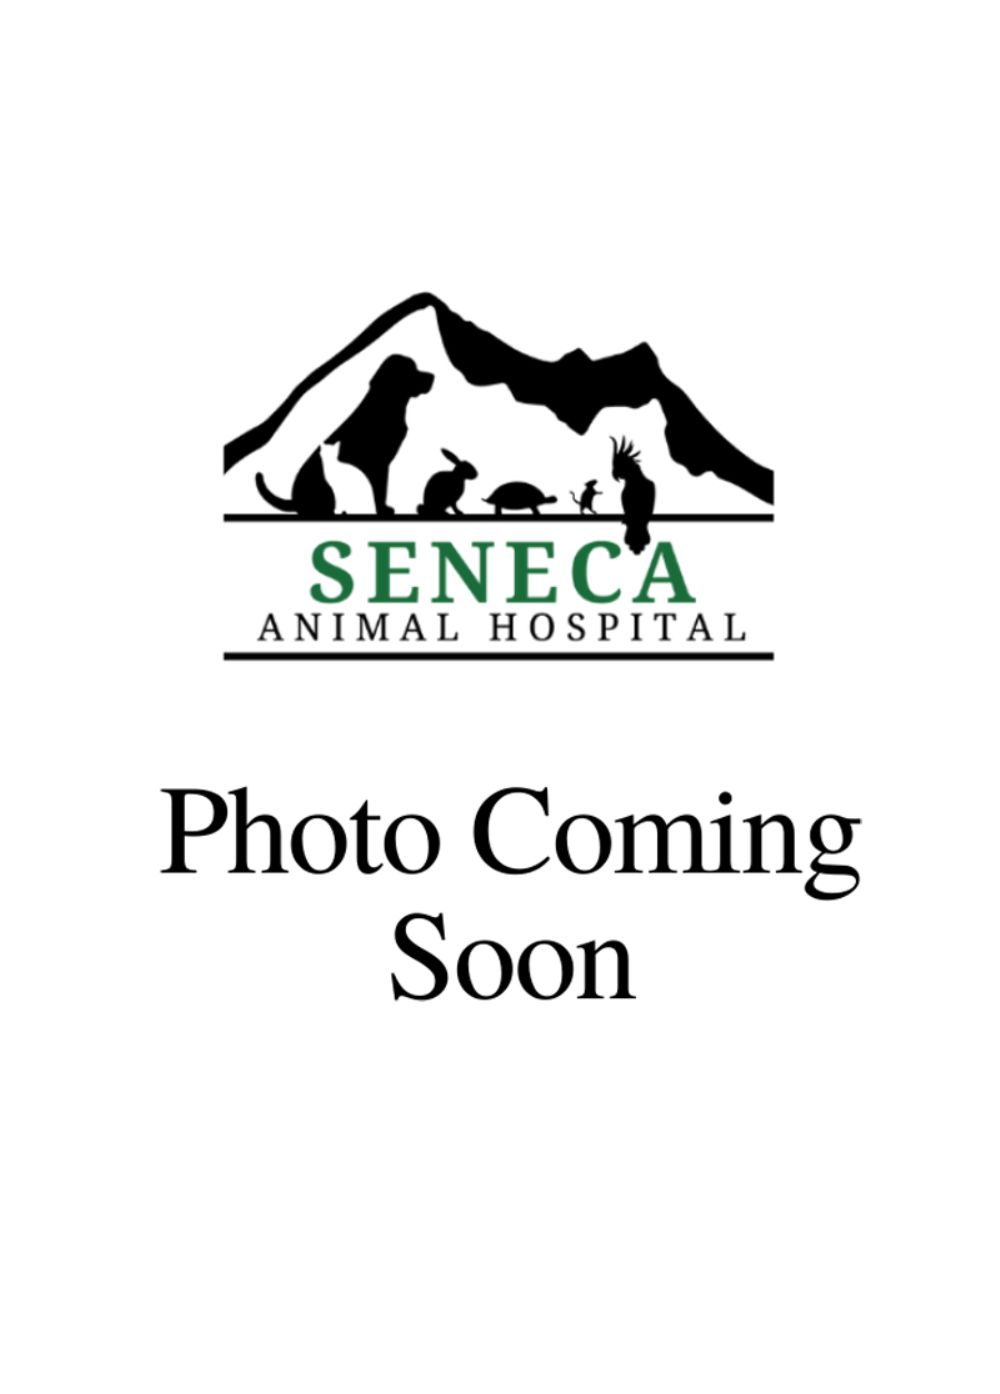 Seneca Animal Hospital photo coming soon